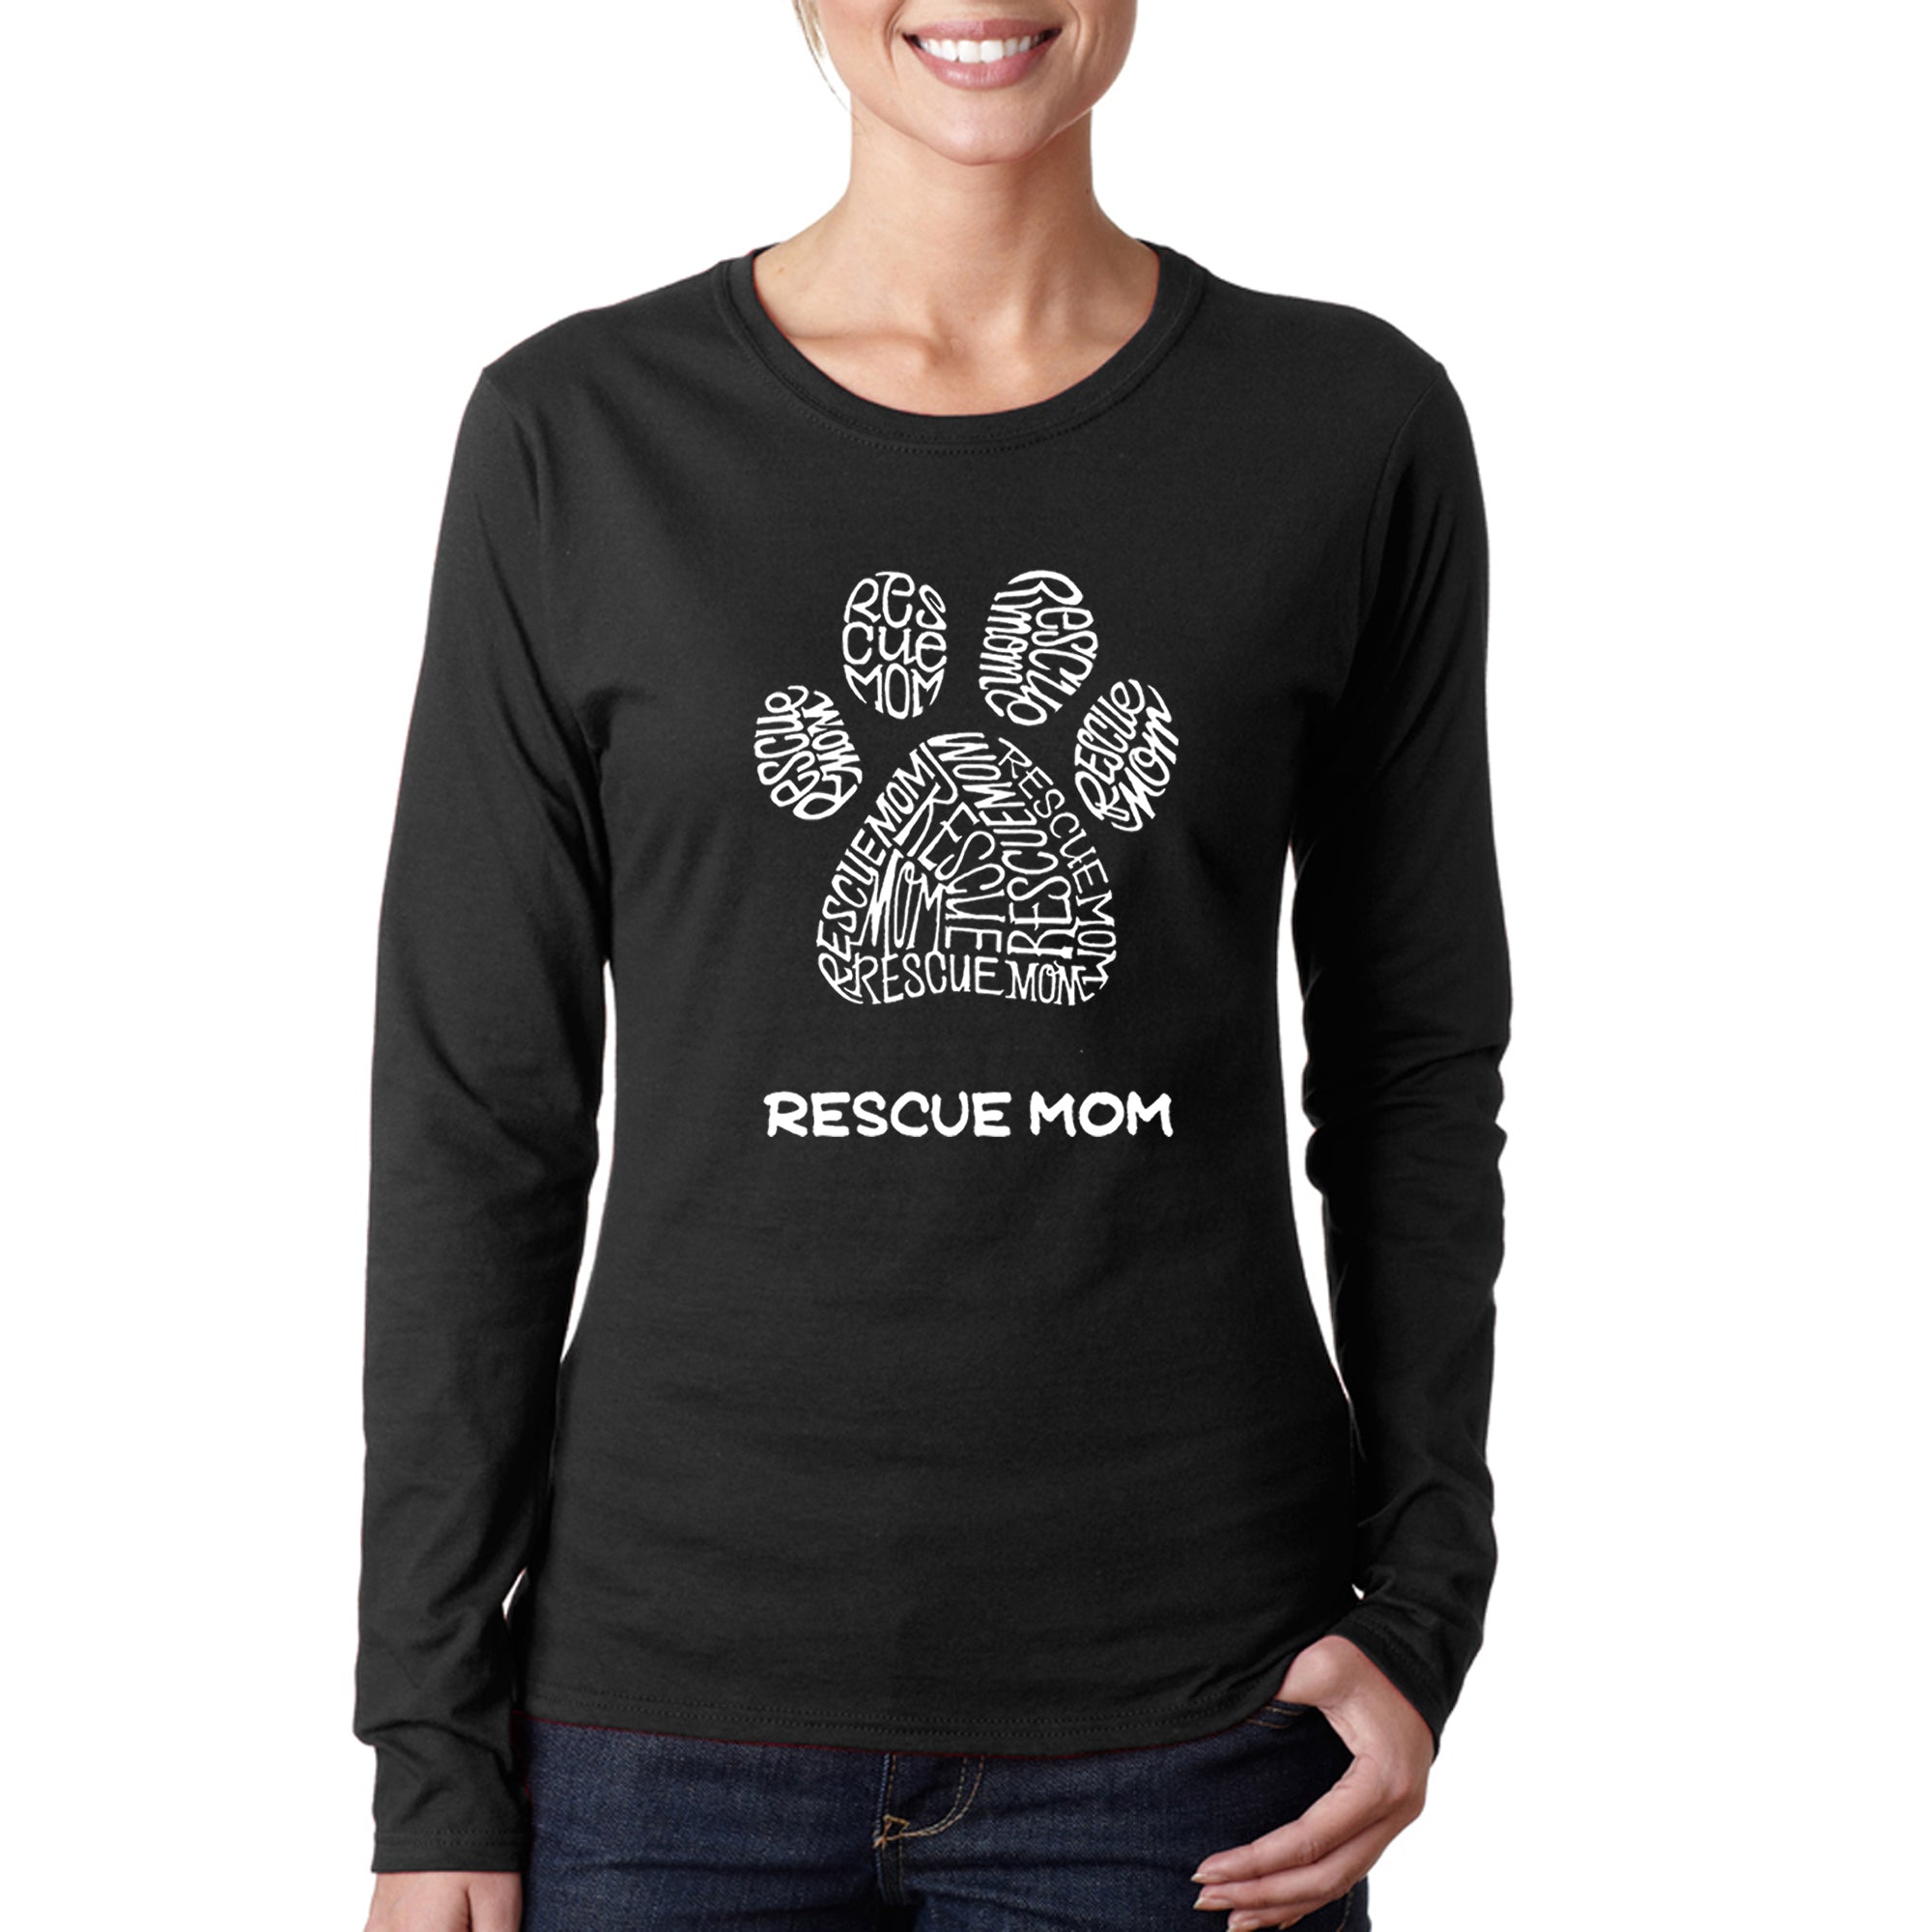 Rescue Mom - Women's Word Art Long Sleeve T-Shirt - Black - Medium